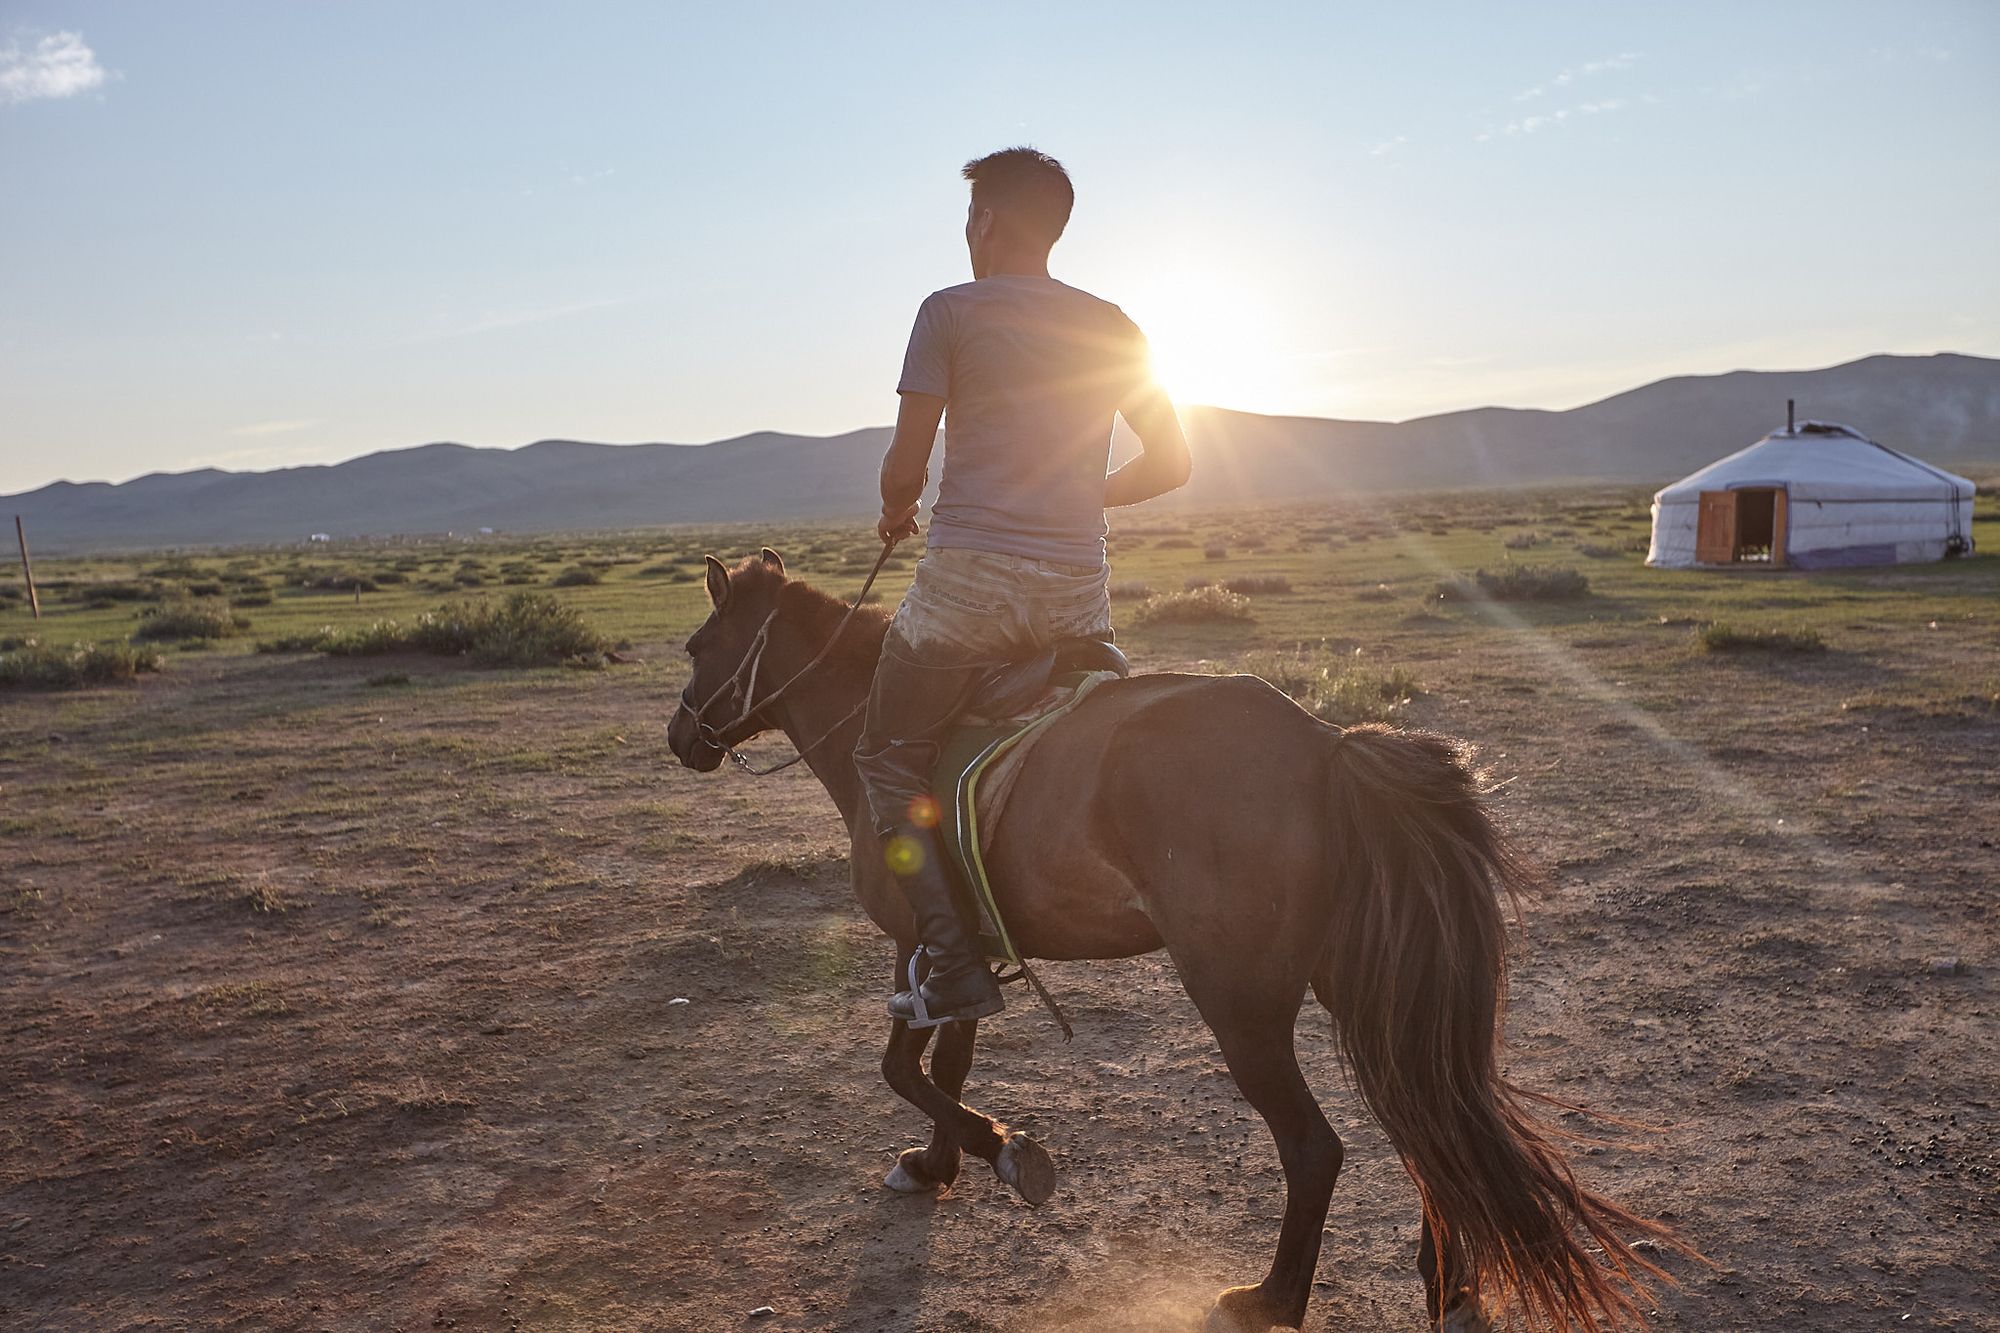 The pastoralists in the Gobi Desert, Mongolia